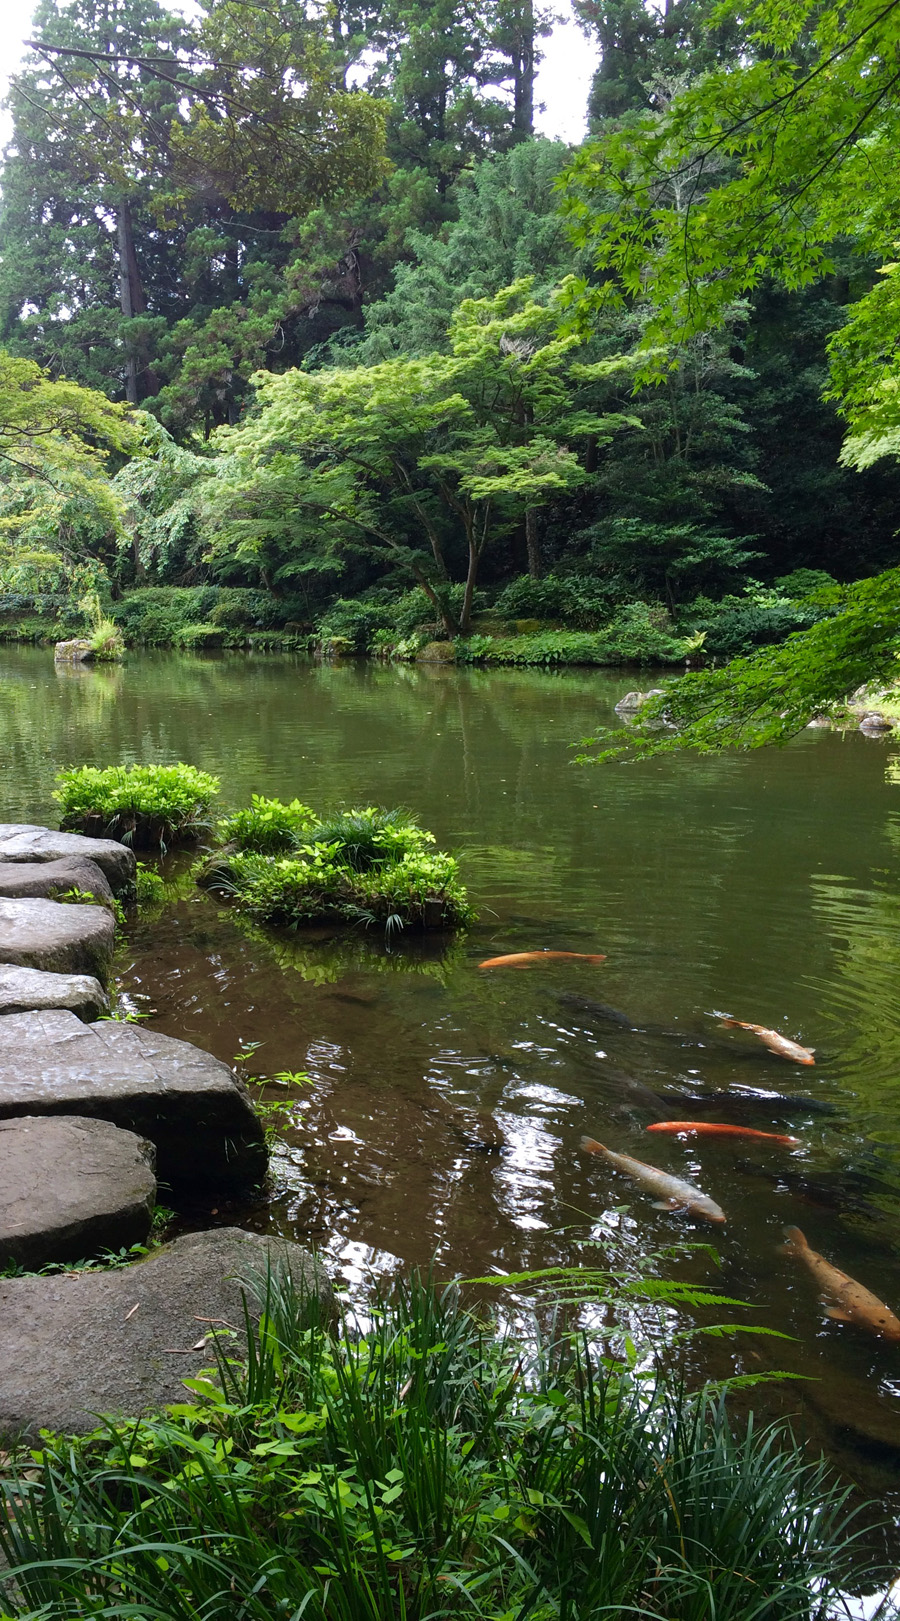 Tranquility in a gem of a garden, Naritasan Shinshoji Temple, Chiba Pref.